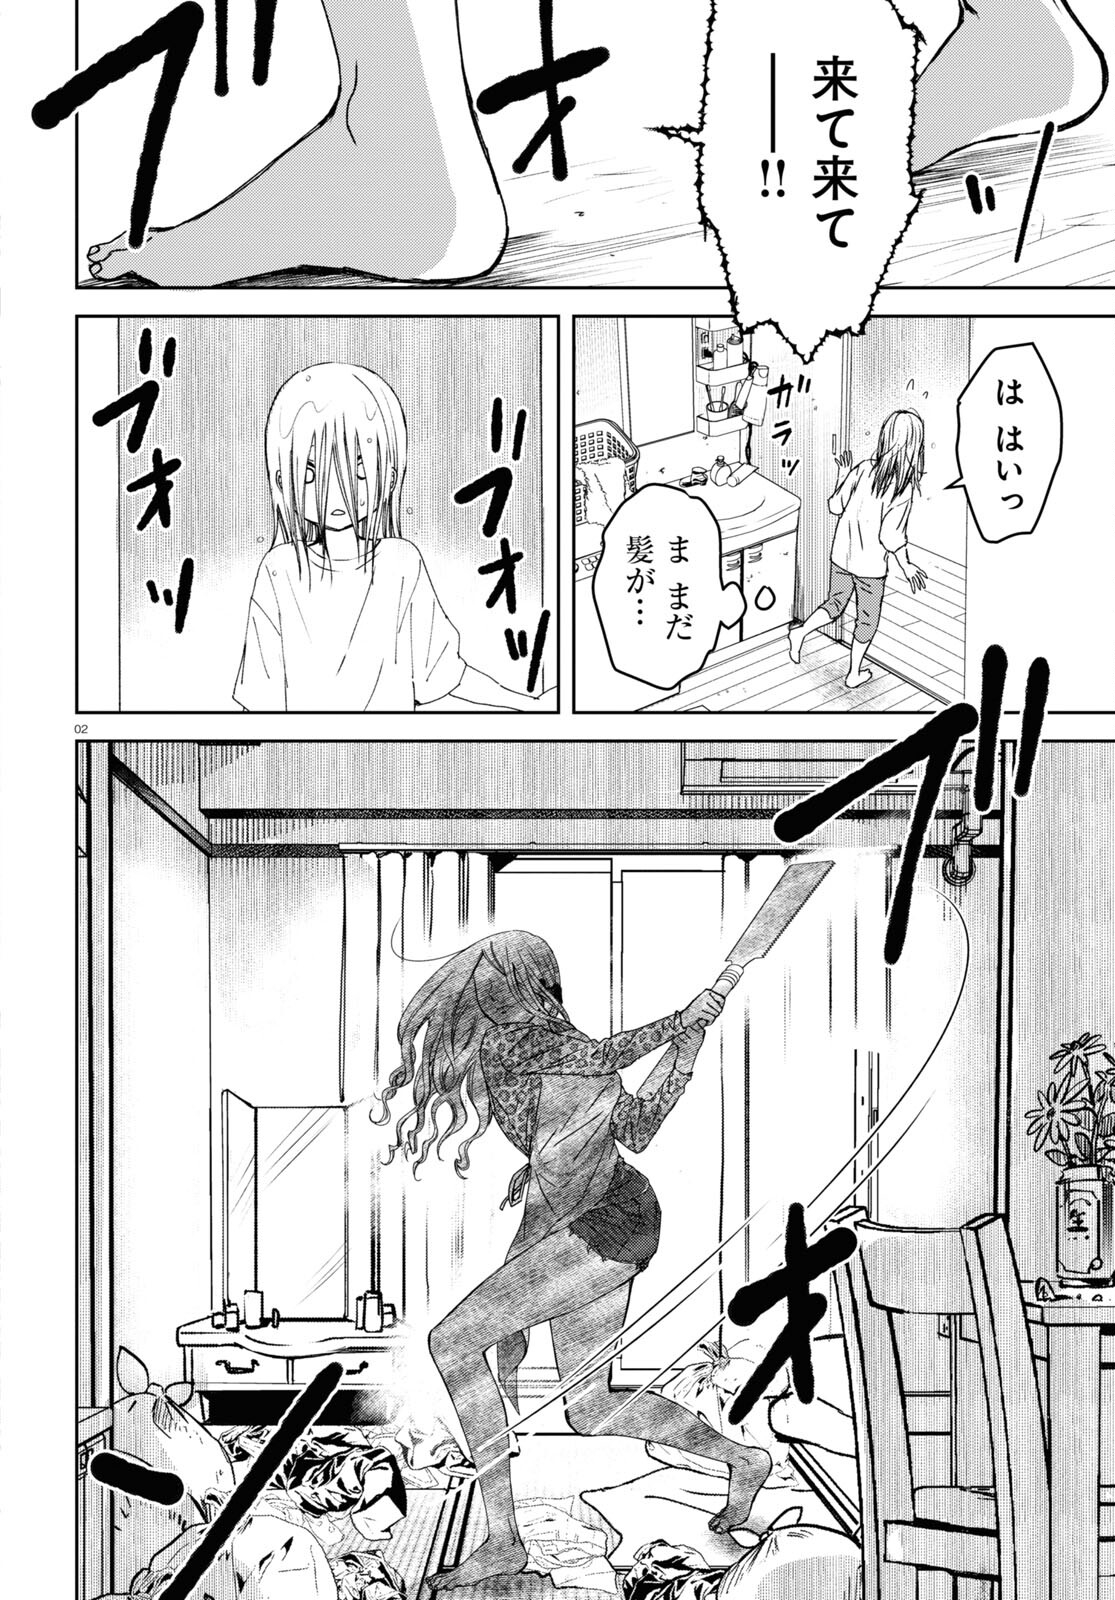 Watashi no Okaa-san (USAYA Mame) - Chapter 2 - Page 2